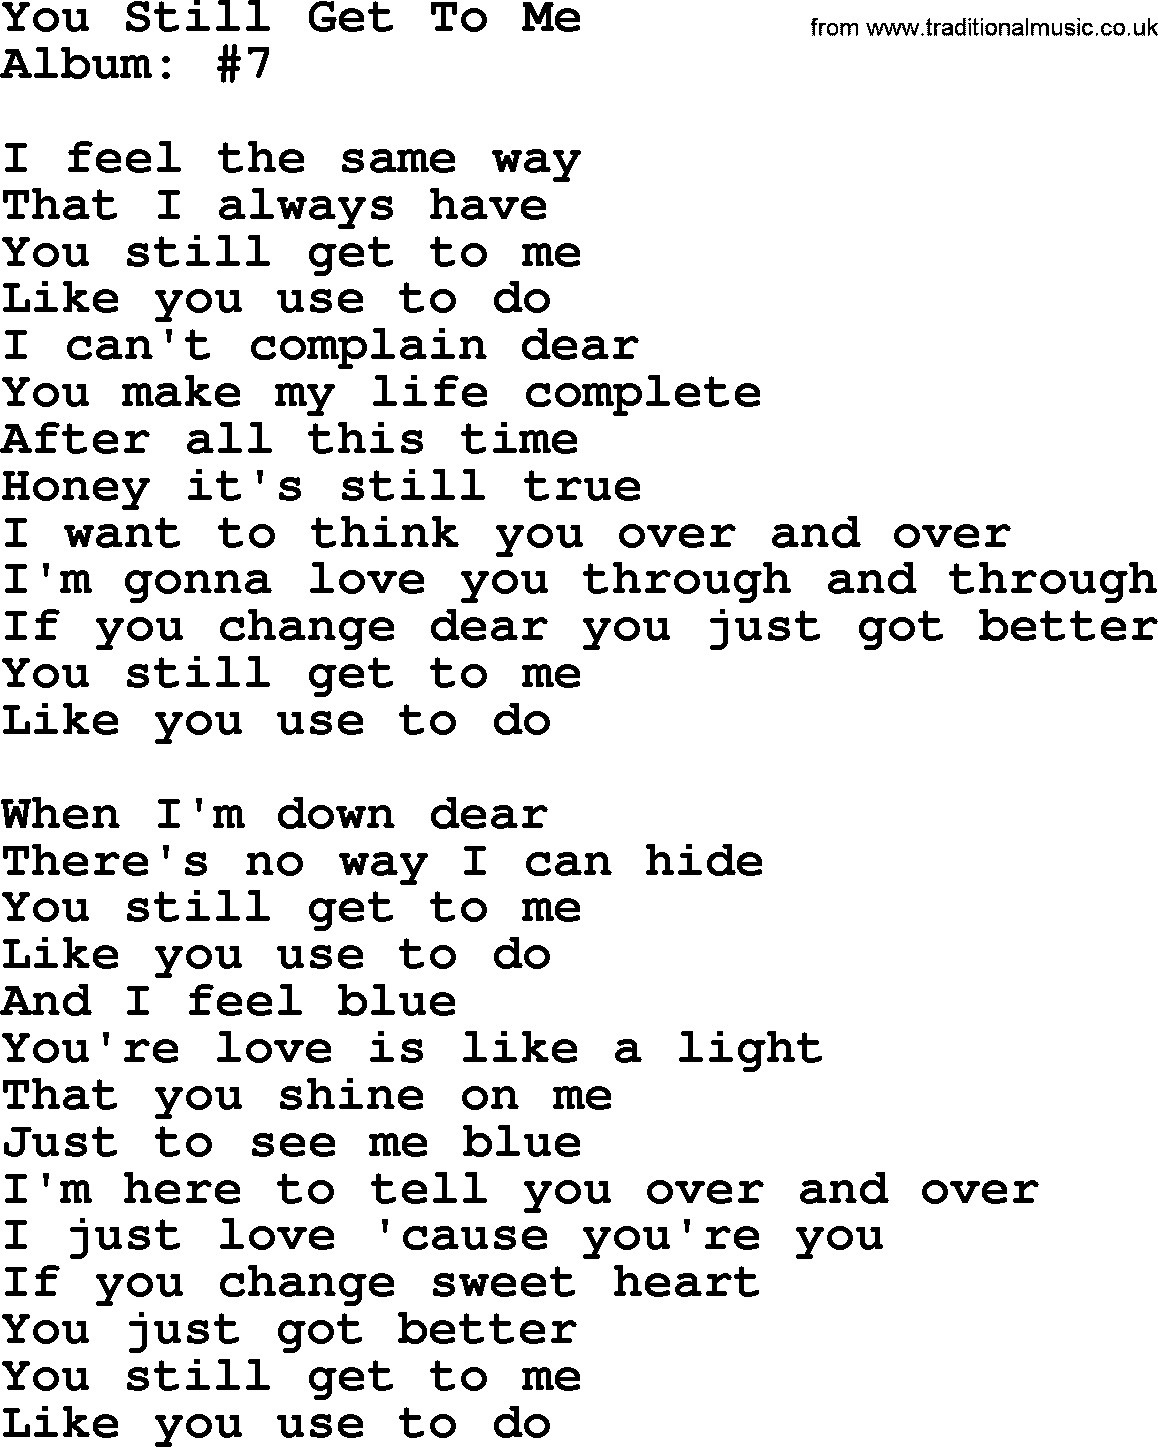 George Strait song: You Still Get To Me, lyrics